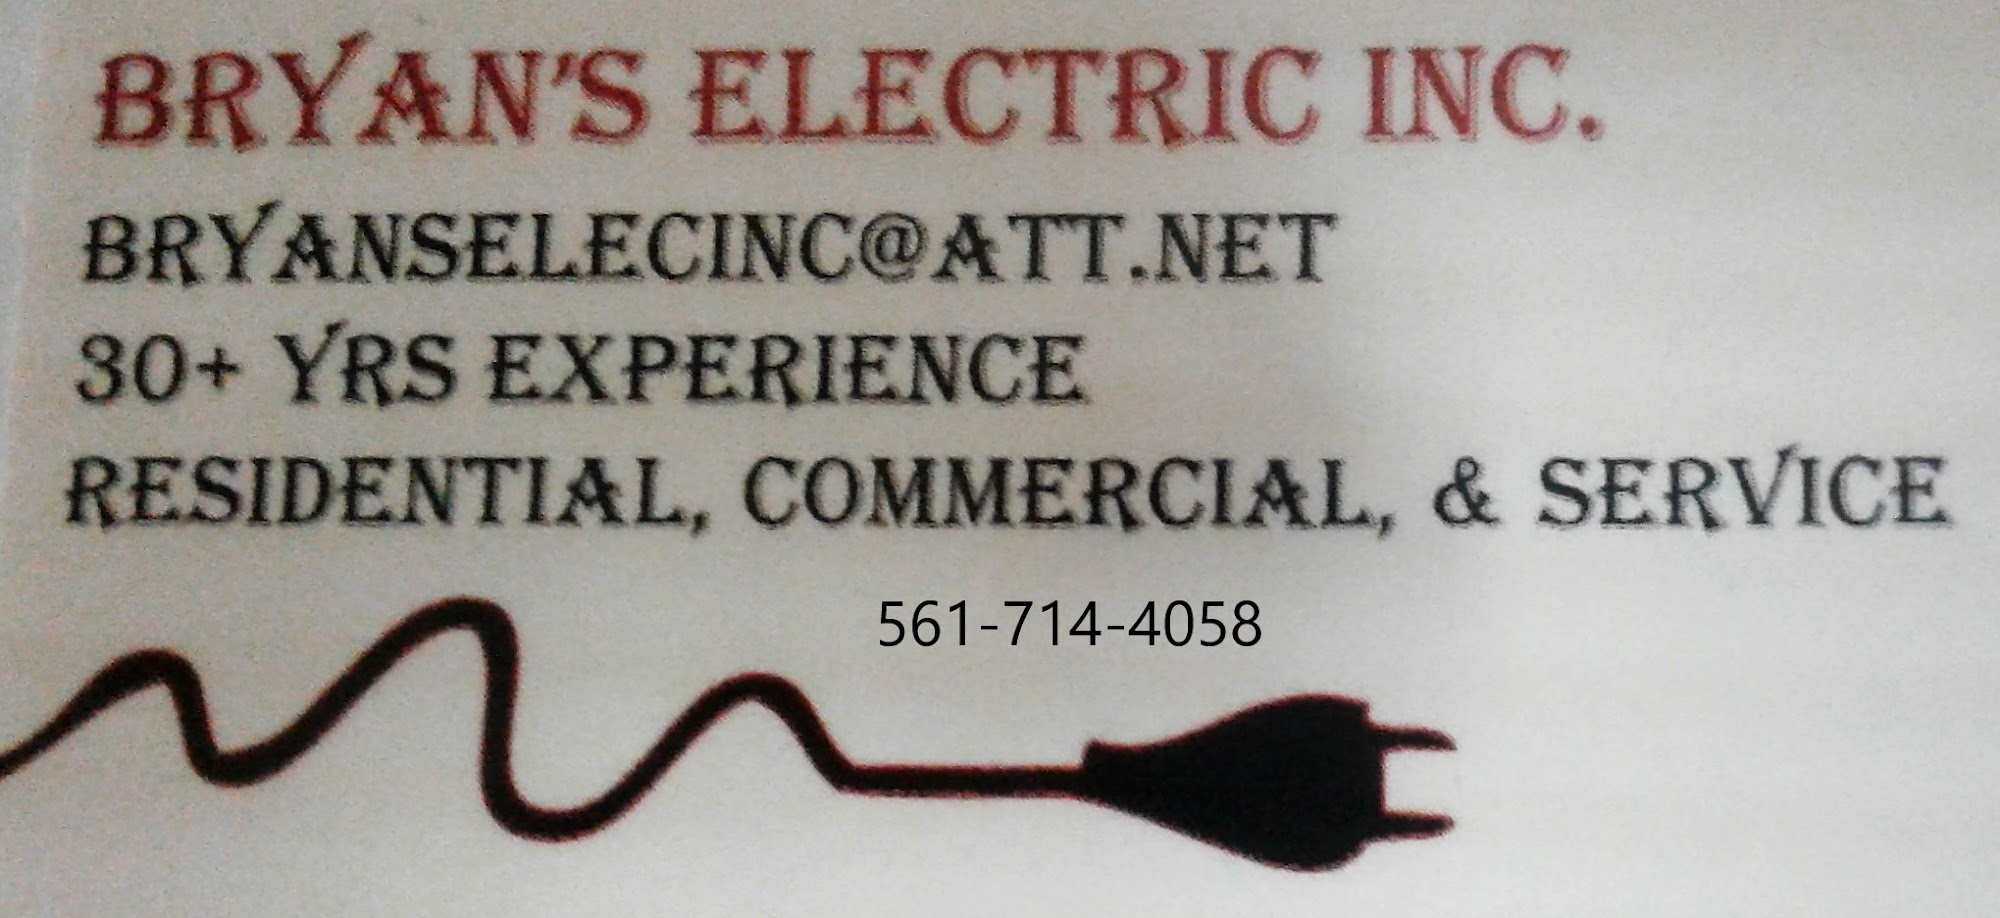 Bryans Electric Inc.